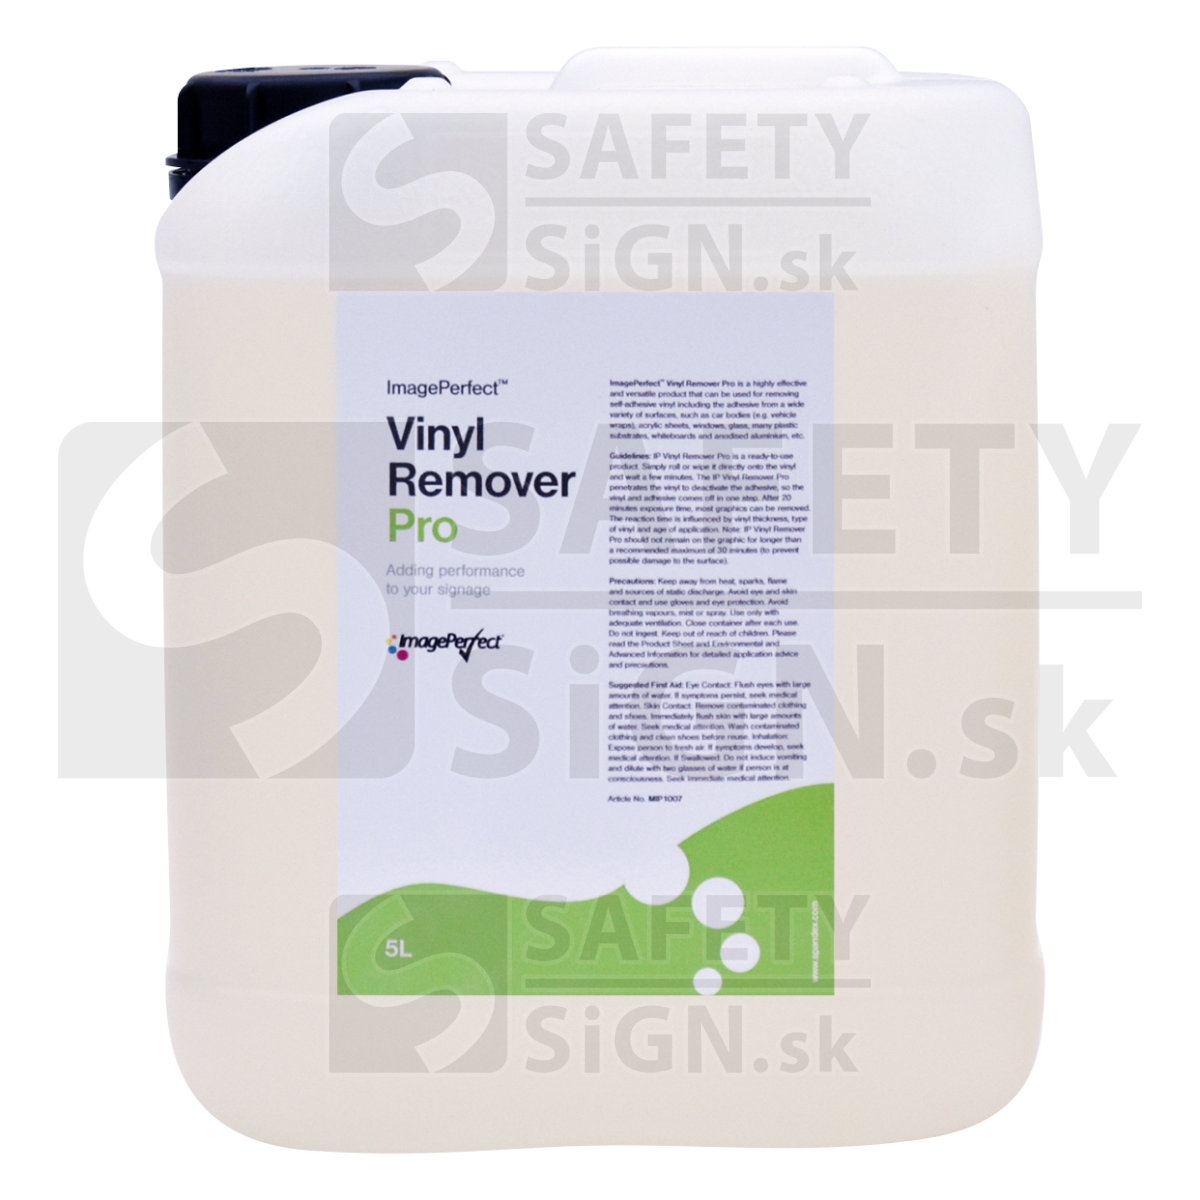 ImagePerfect Vinyl Remover Pro